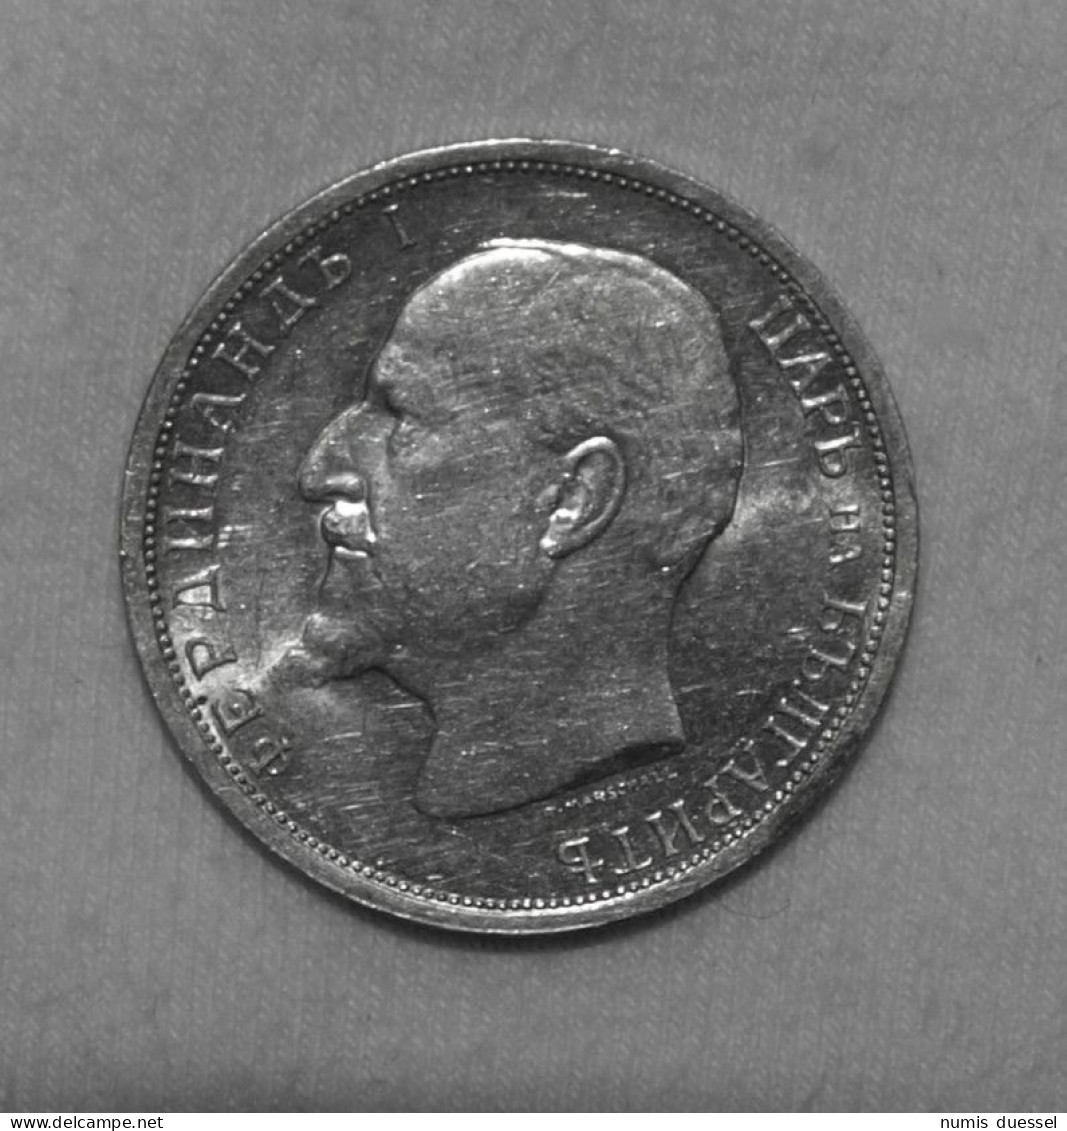 Silber/Silver Bulgarien/Bulgaria Ferdinand I, 1913, 1 Lewa UNC - Bulgarije